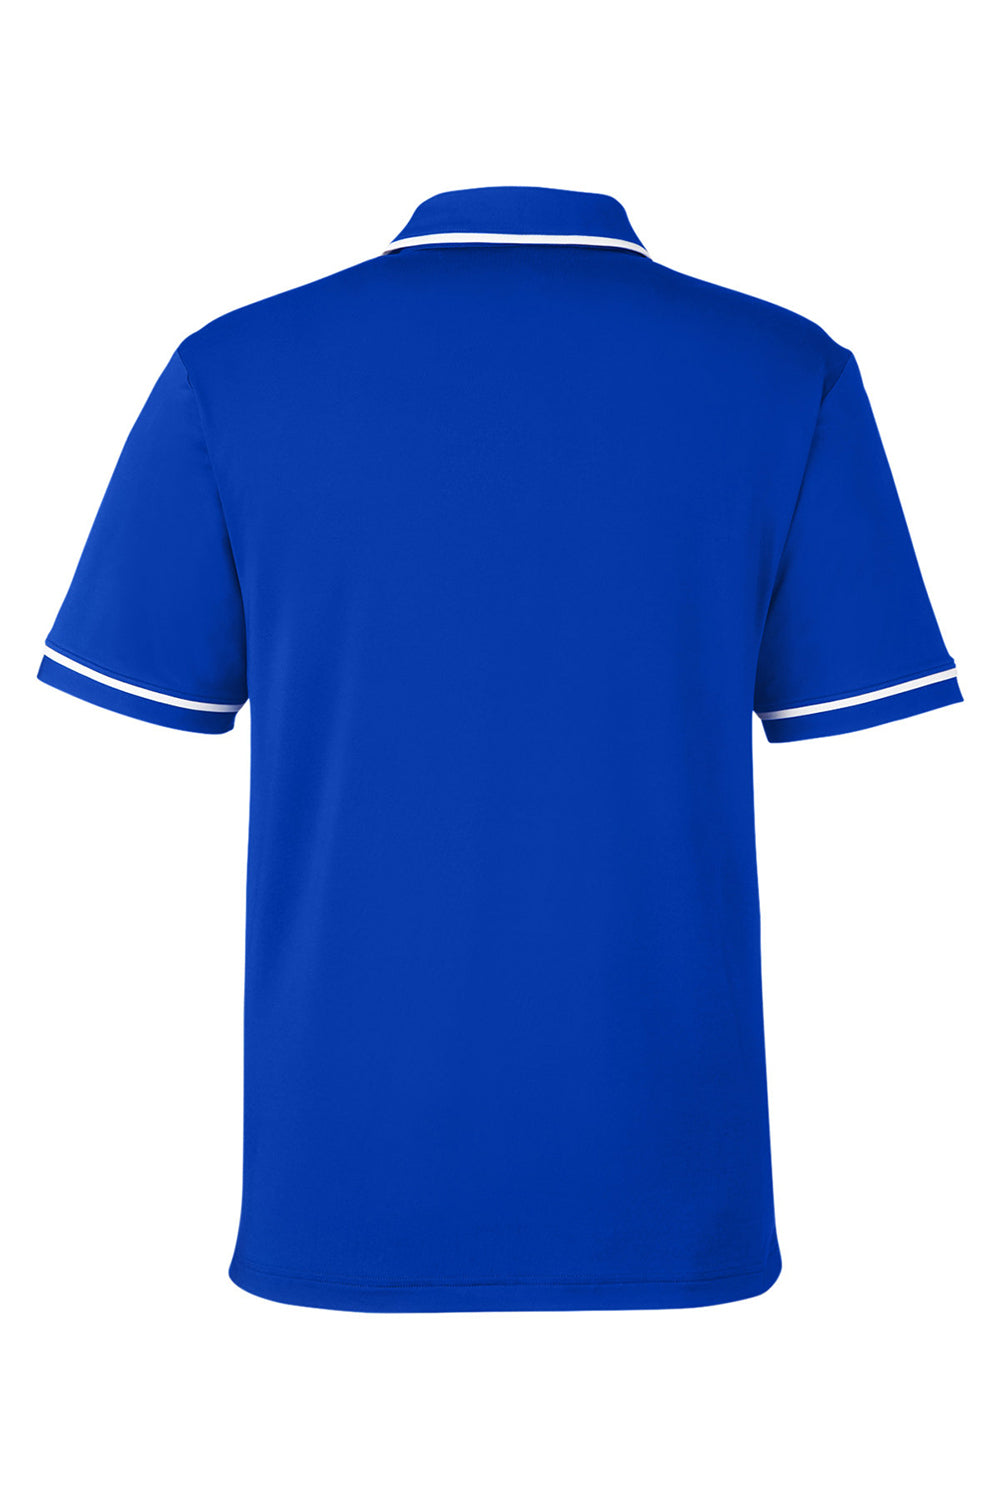 Under Armour 1376904 Mens Teams Performance Moisture Wicking Short Sleeve Polo Shirt Royal Blue Flat Back